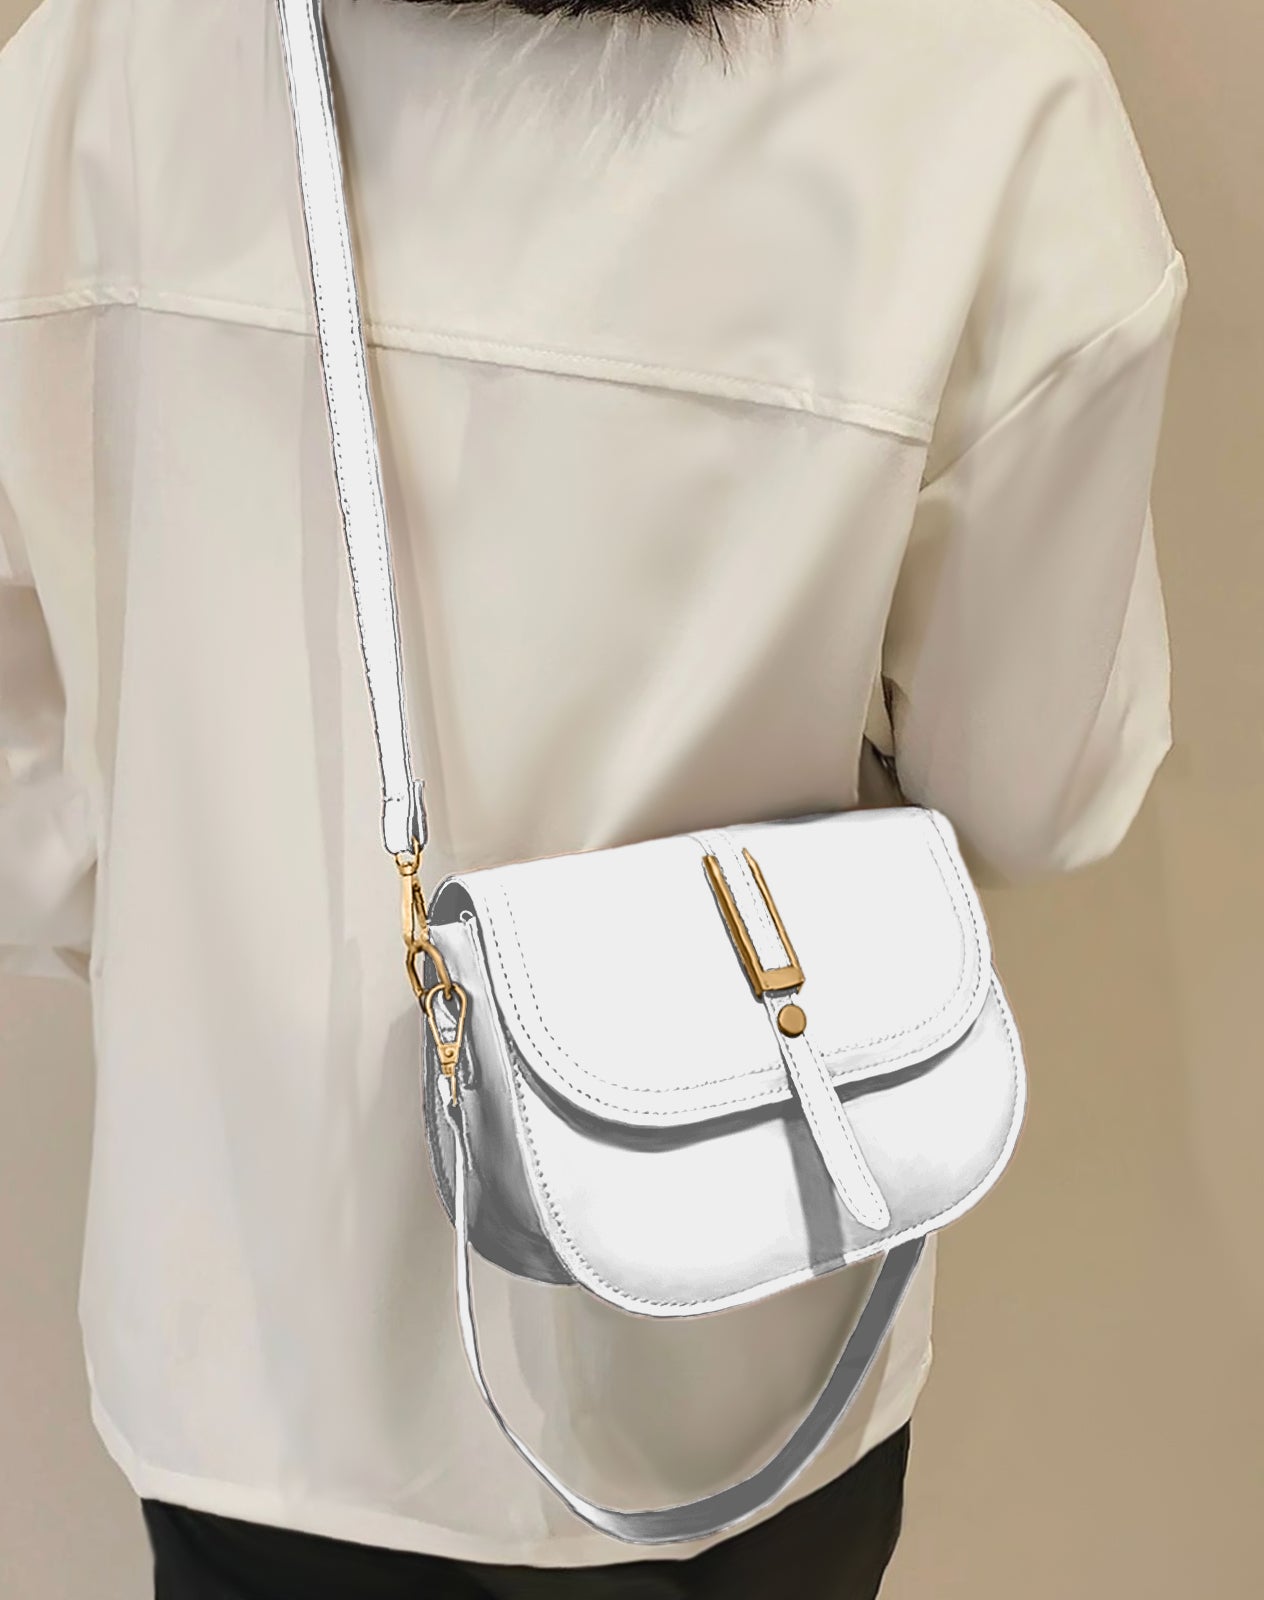 06-SerenitySoul Mini CrossLeather Bag - white